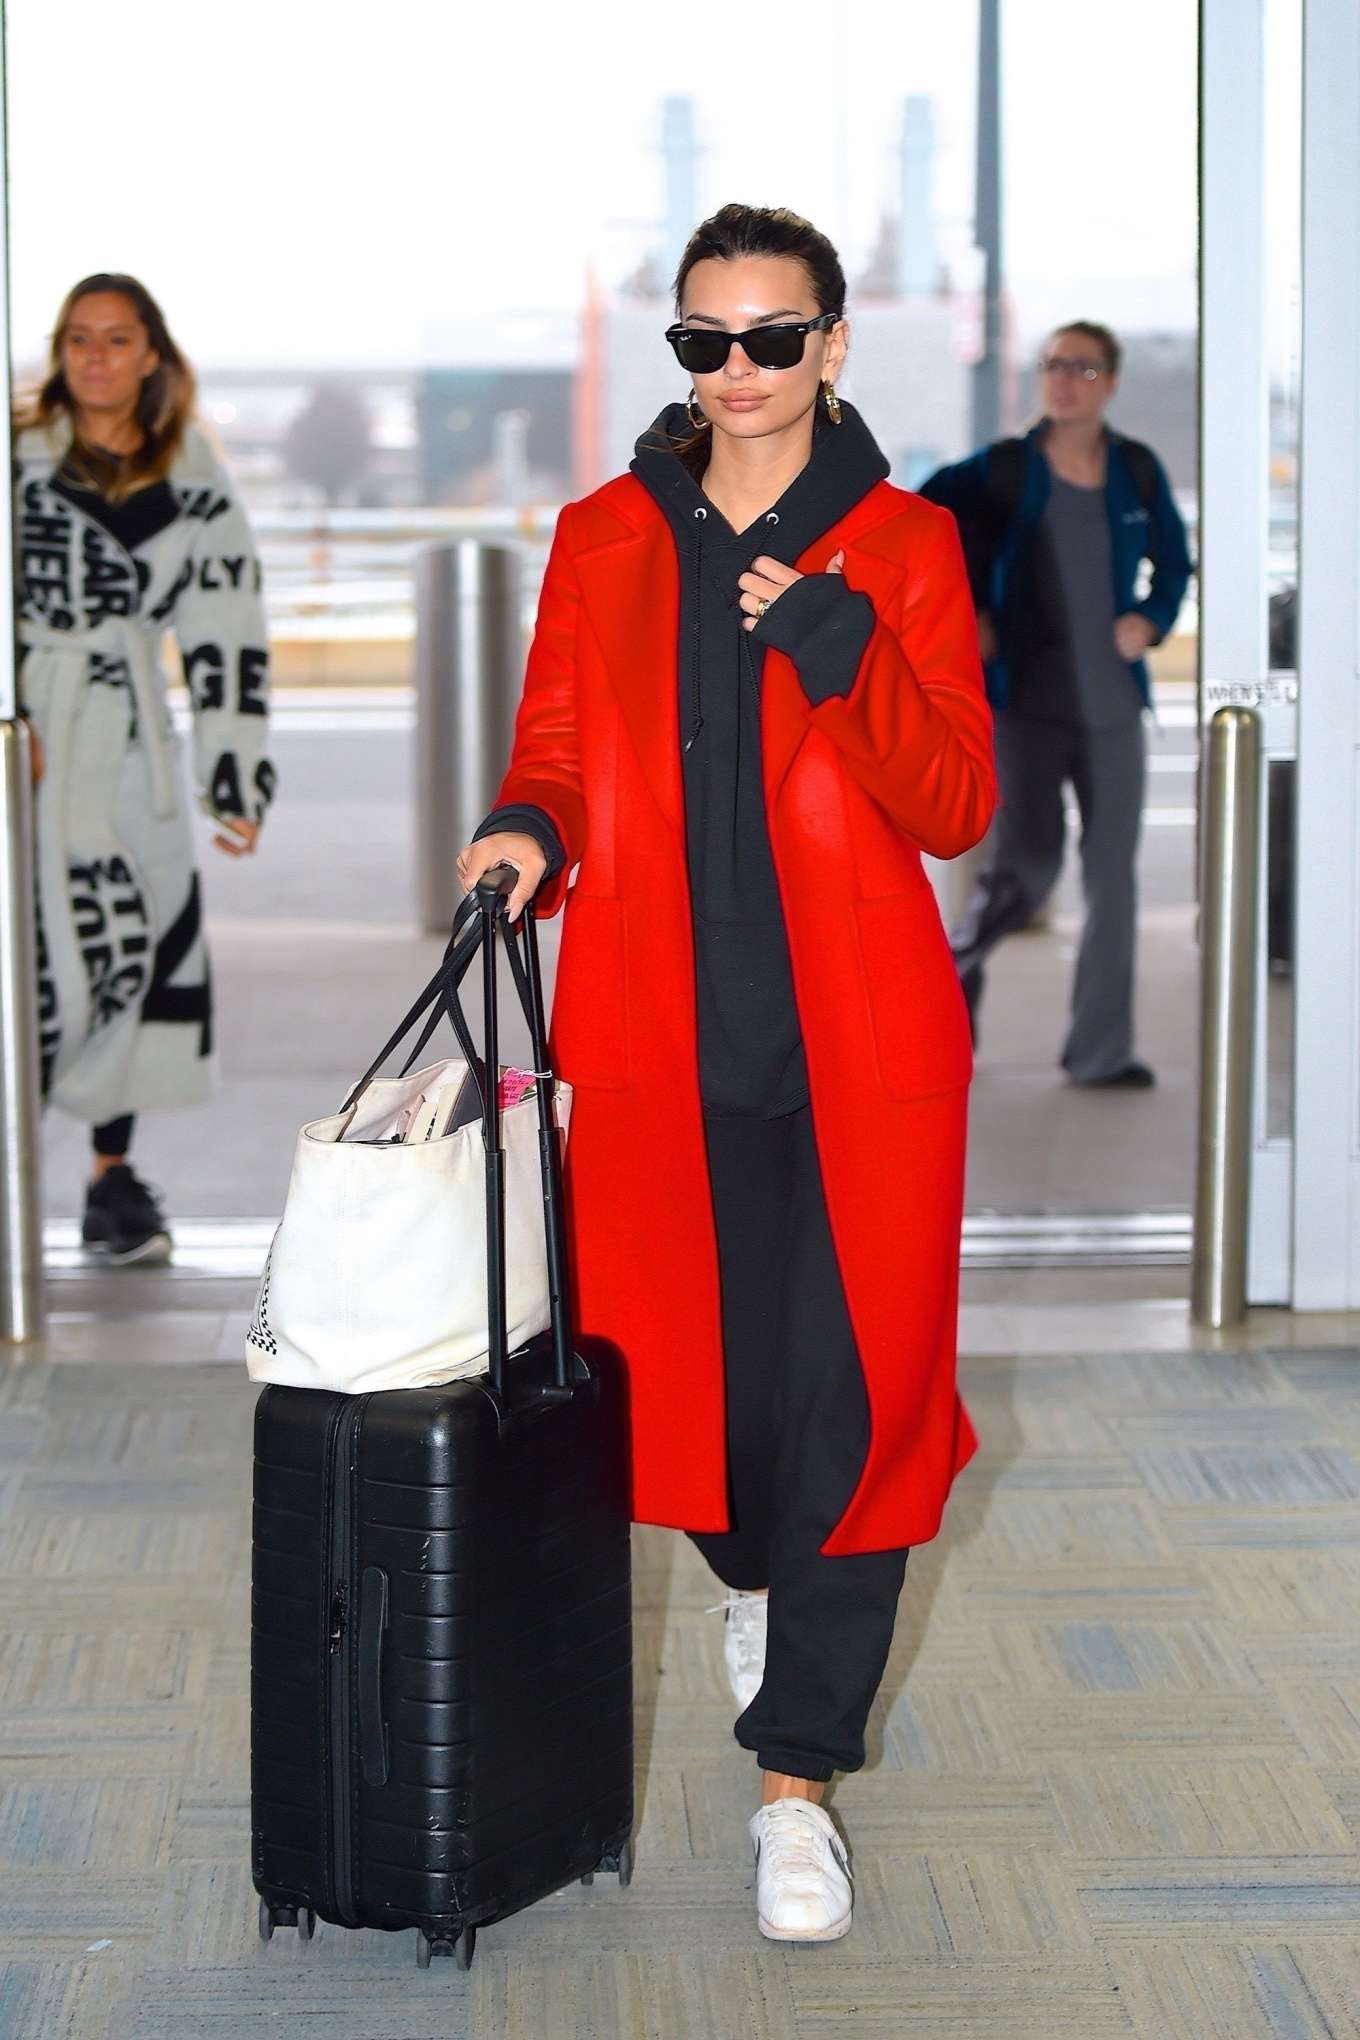 Emily Ratajkowski 2020 : Emily Ratajkowski in red coat ready for flight at JFK airport-14